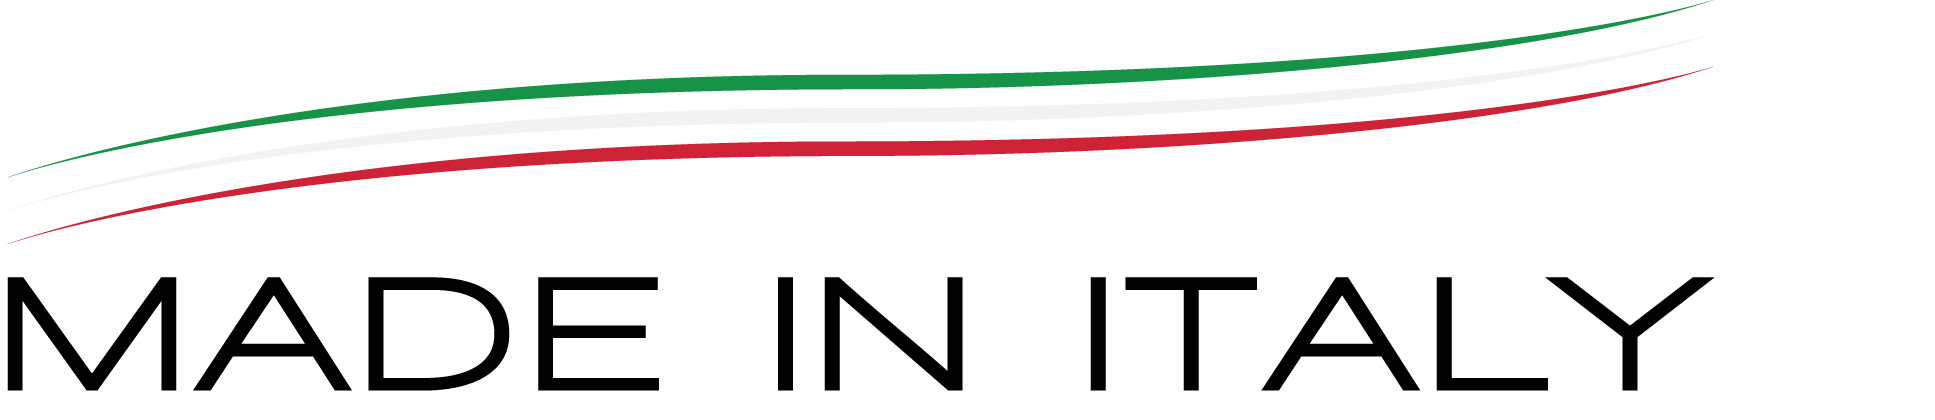 Logo made in Italy